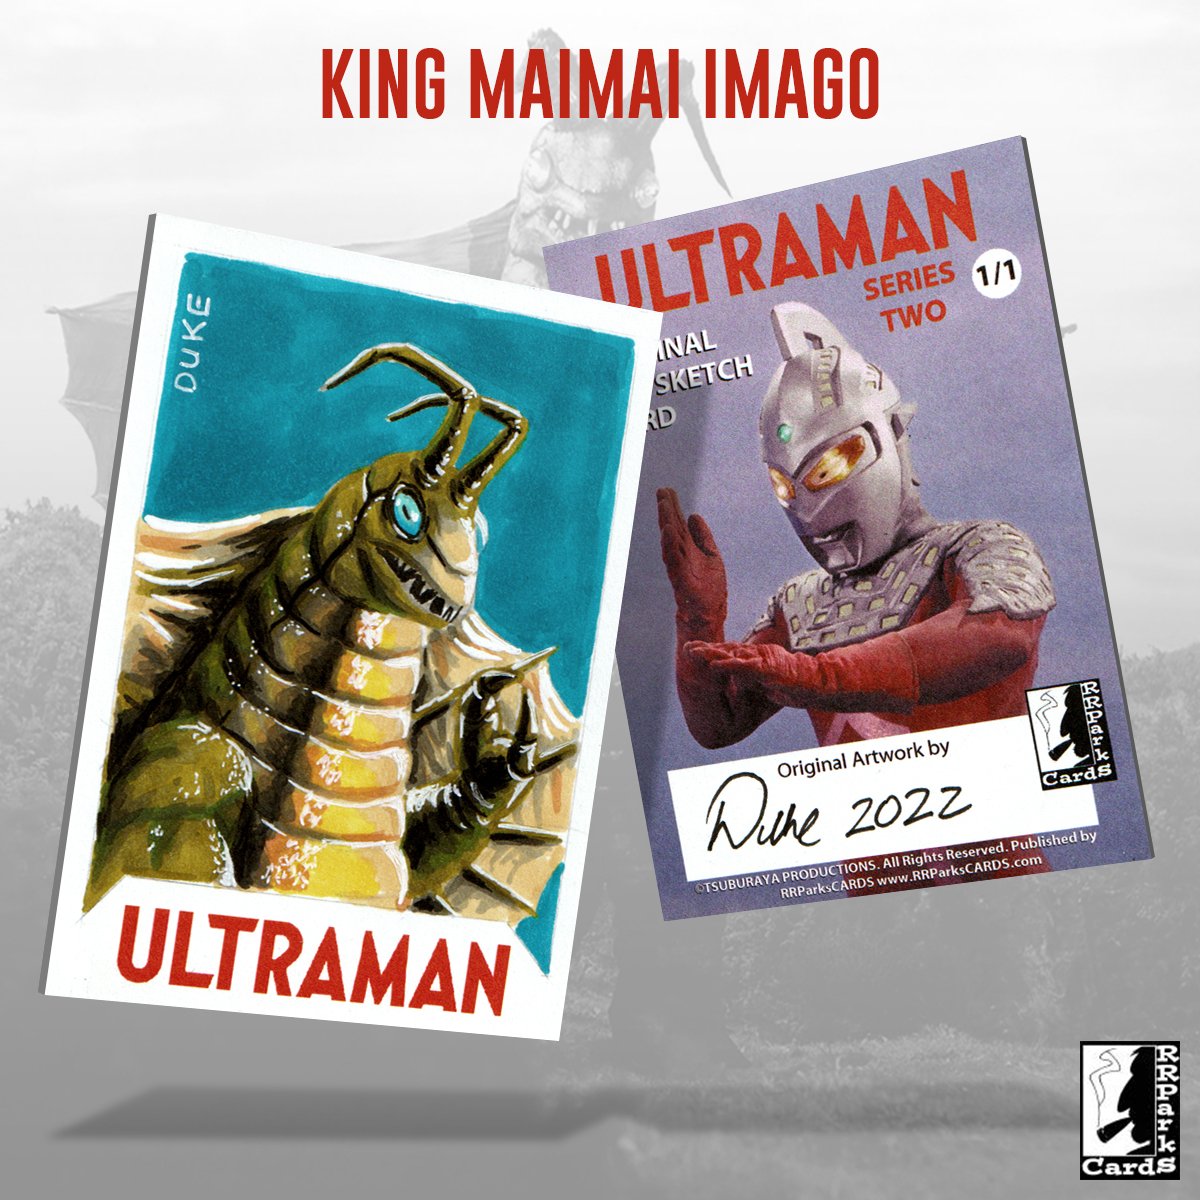 Ultraman Series 2 King Maimai Imago Sketch Card by Duke